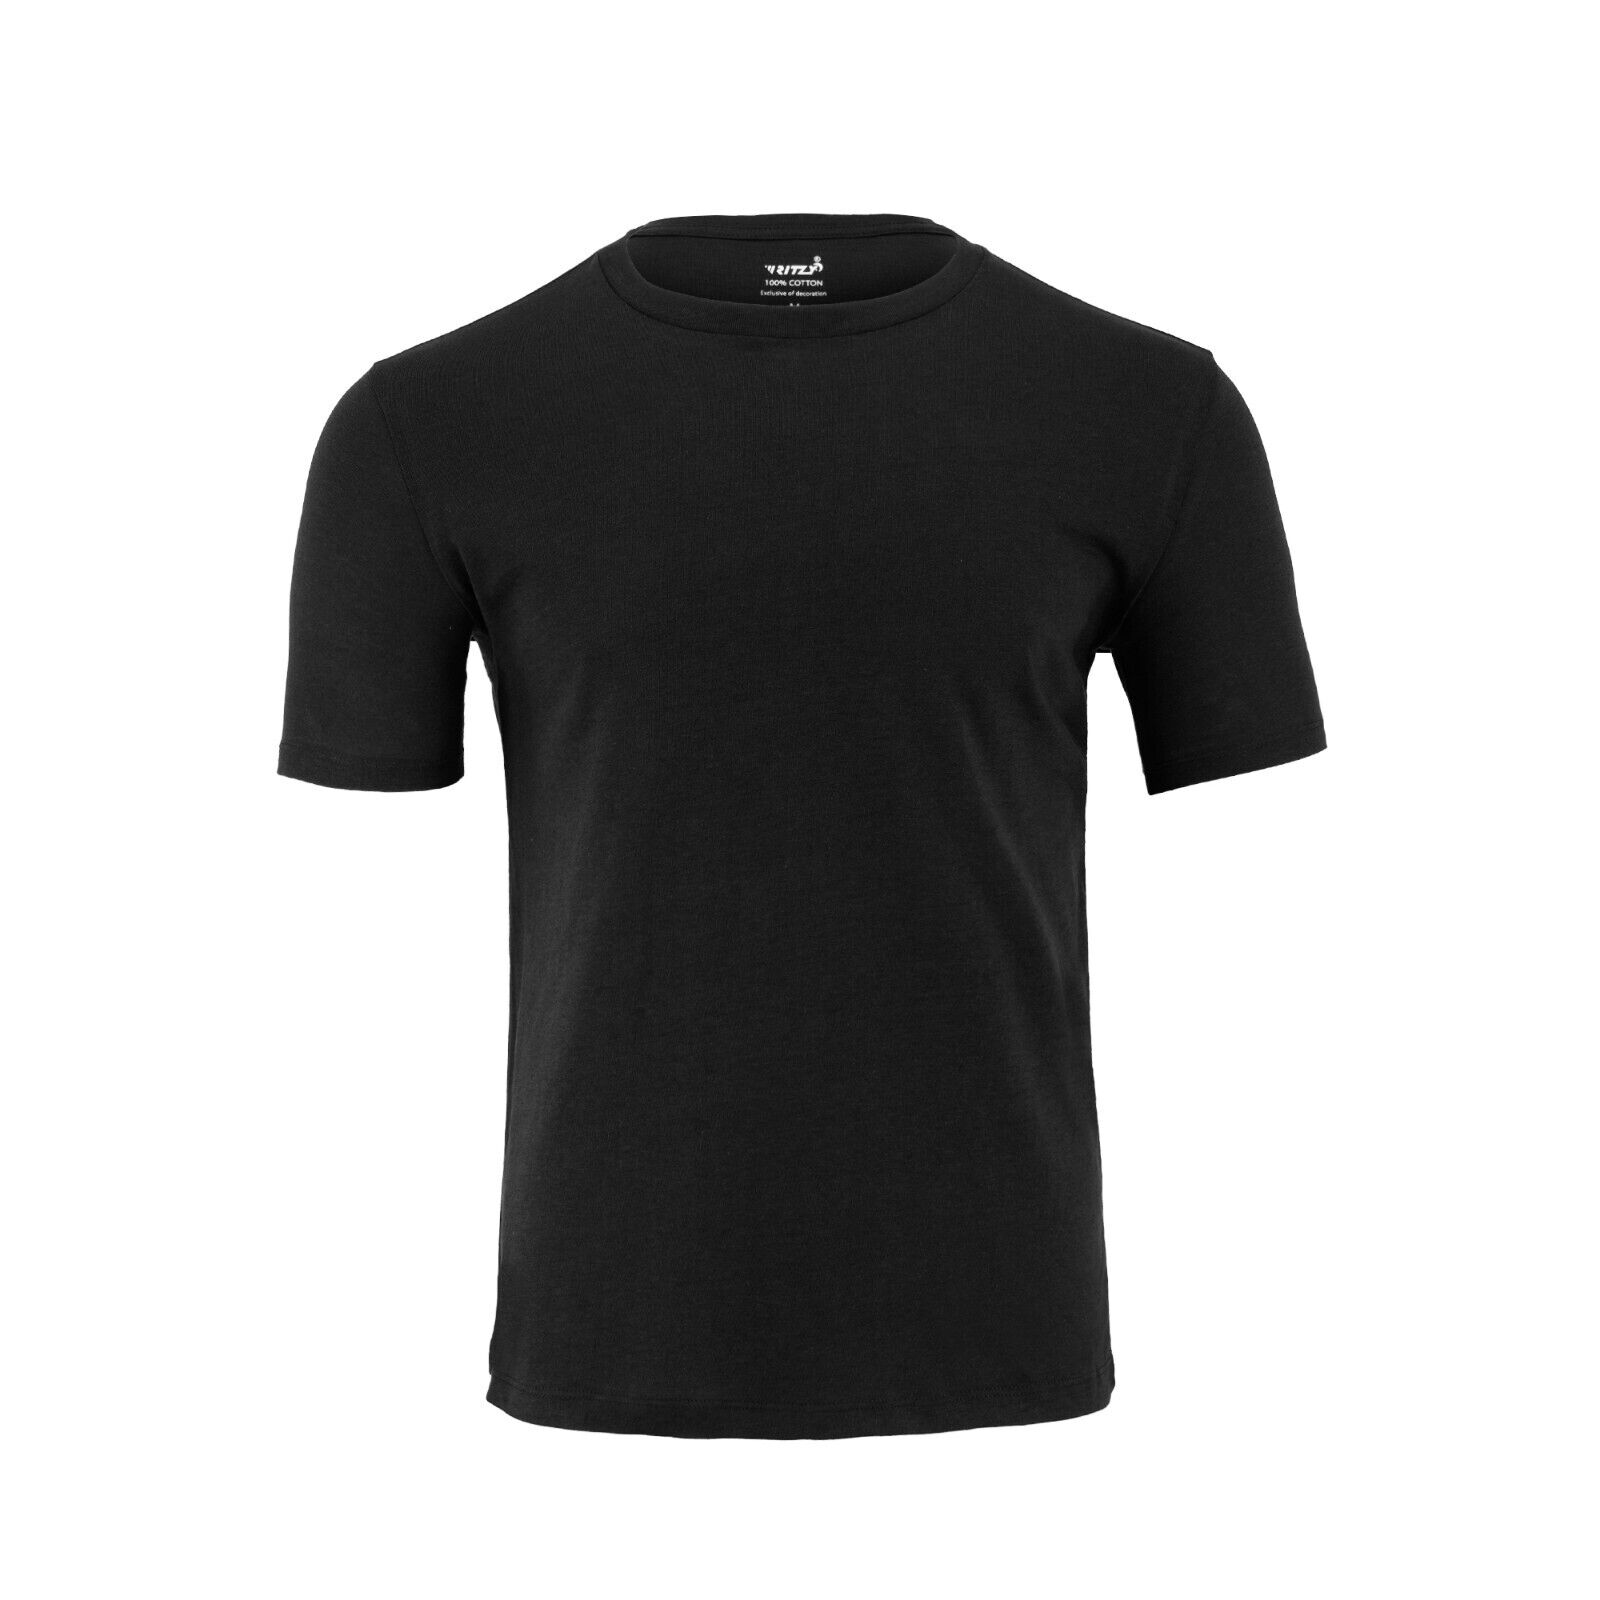 Ritzy Men's T-Shirt 100% Cotton Short Sleeve - Black